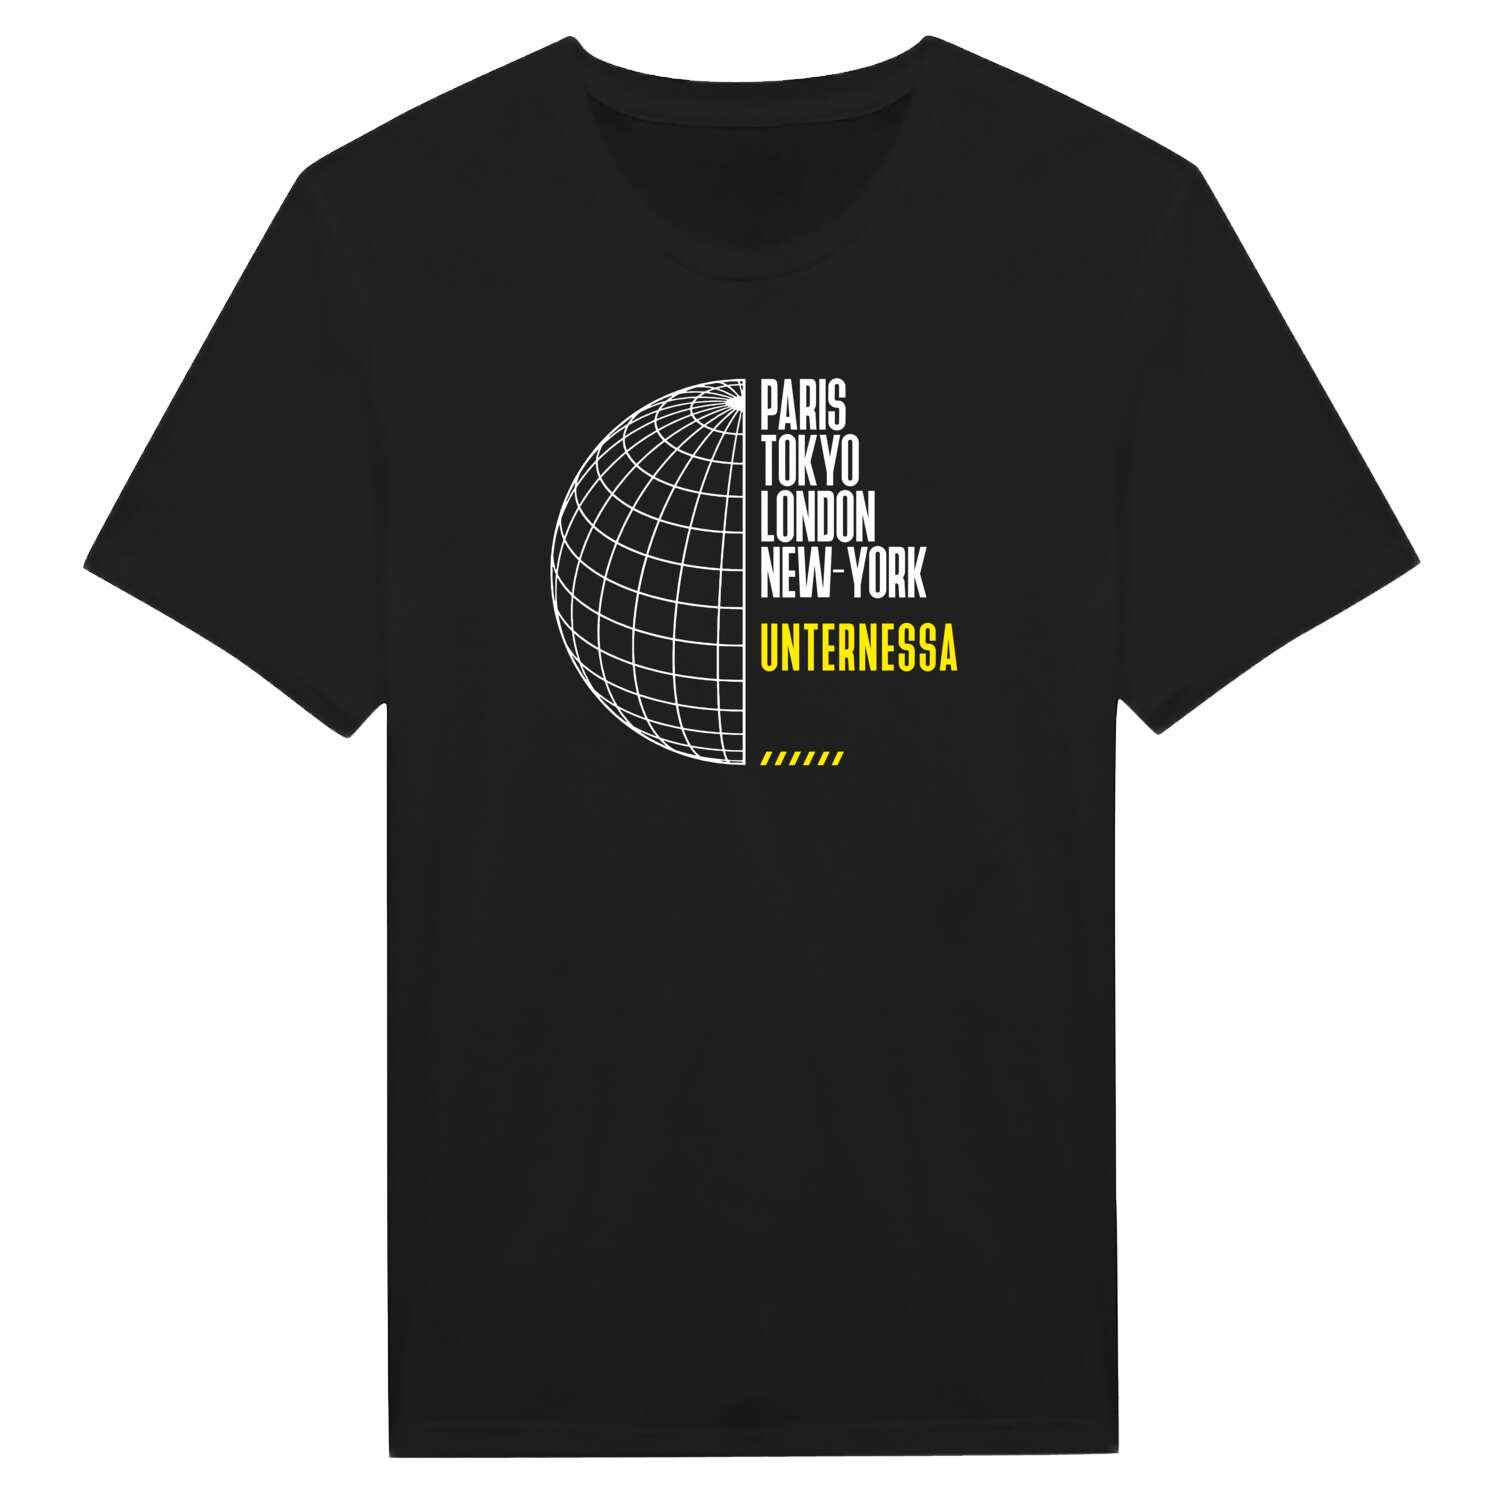 Unternessa T-Shirt »Paris Tokyo London«